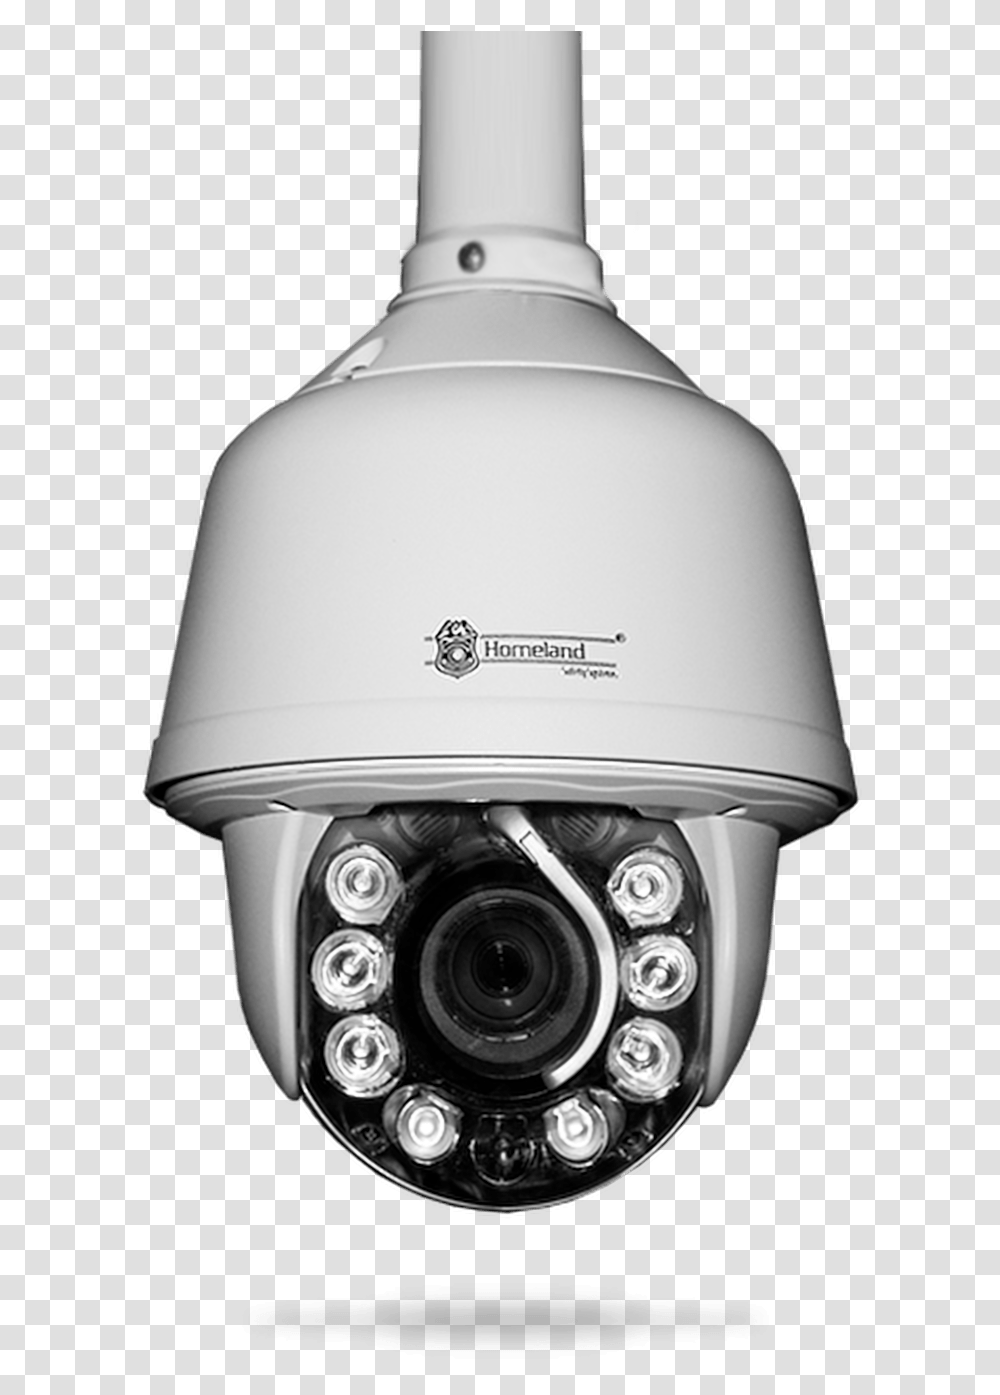 Homeland Safety Systems Inc Surveillance Camera, Electronics, Helmet, Apparel Transparent Png